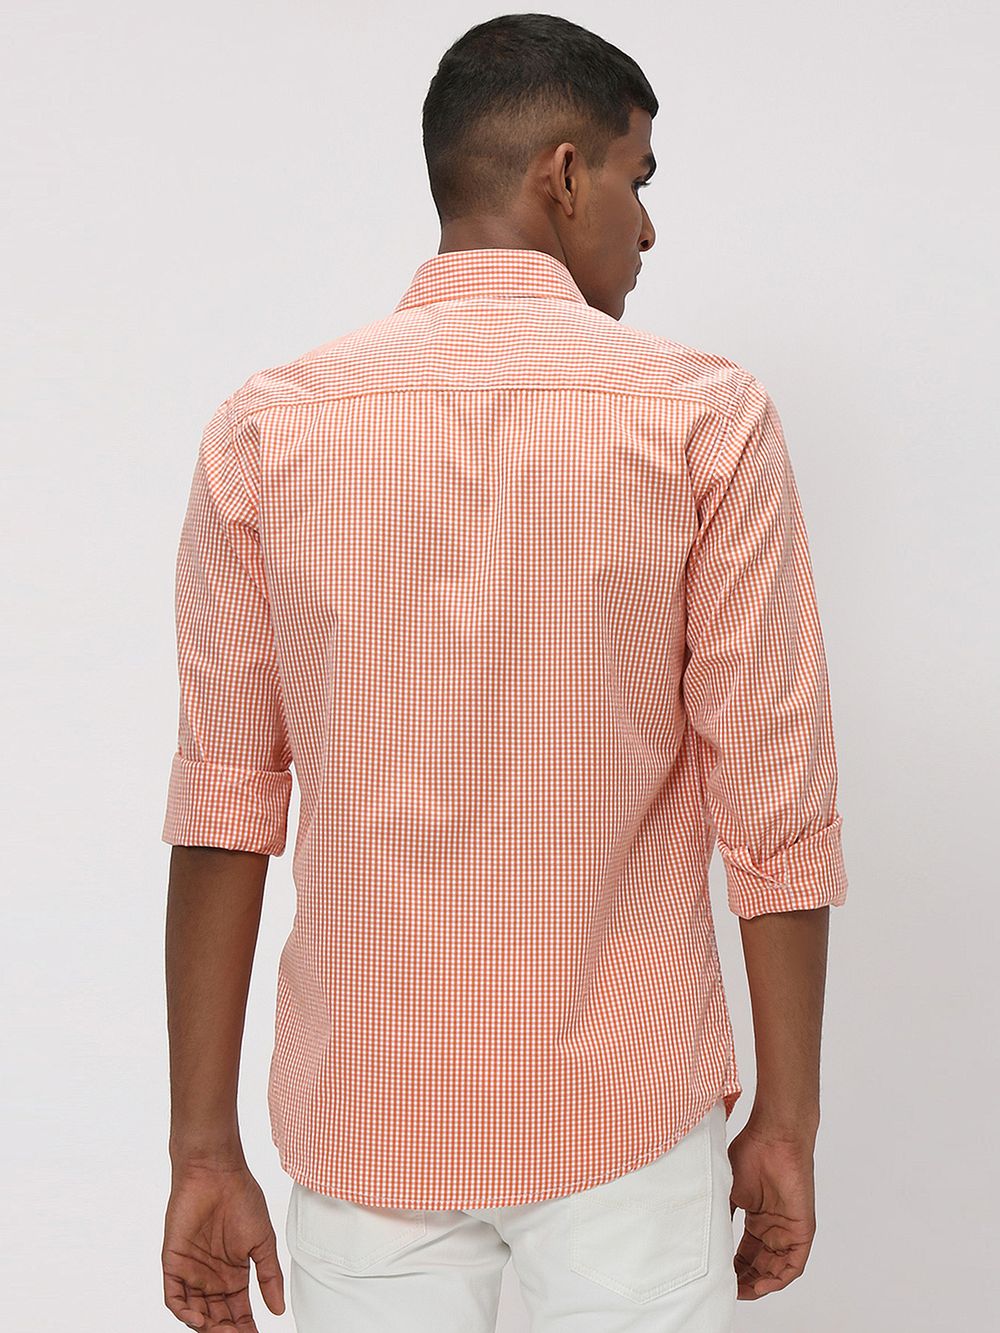 Orange & White Gingham Check Slim Fit Casual Shirt